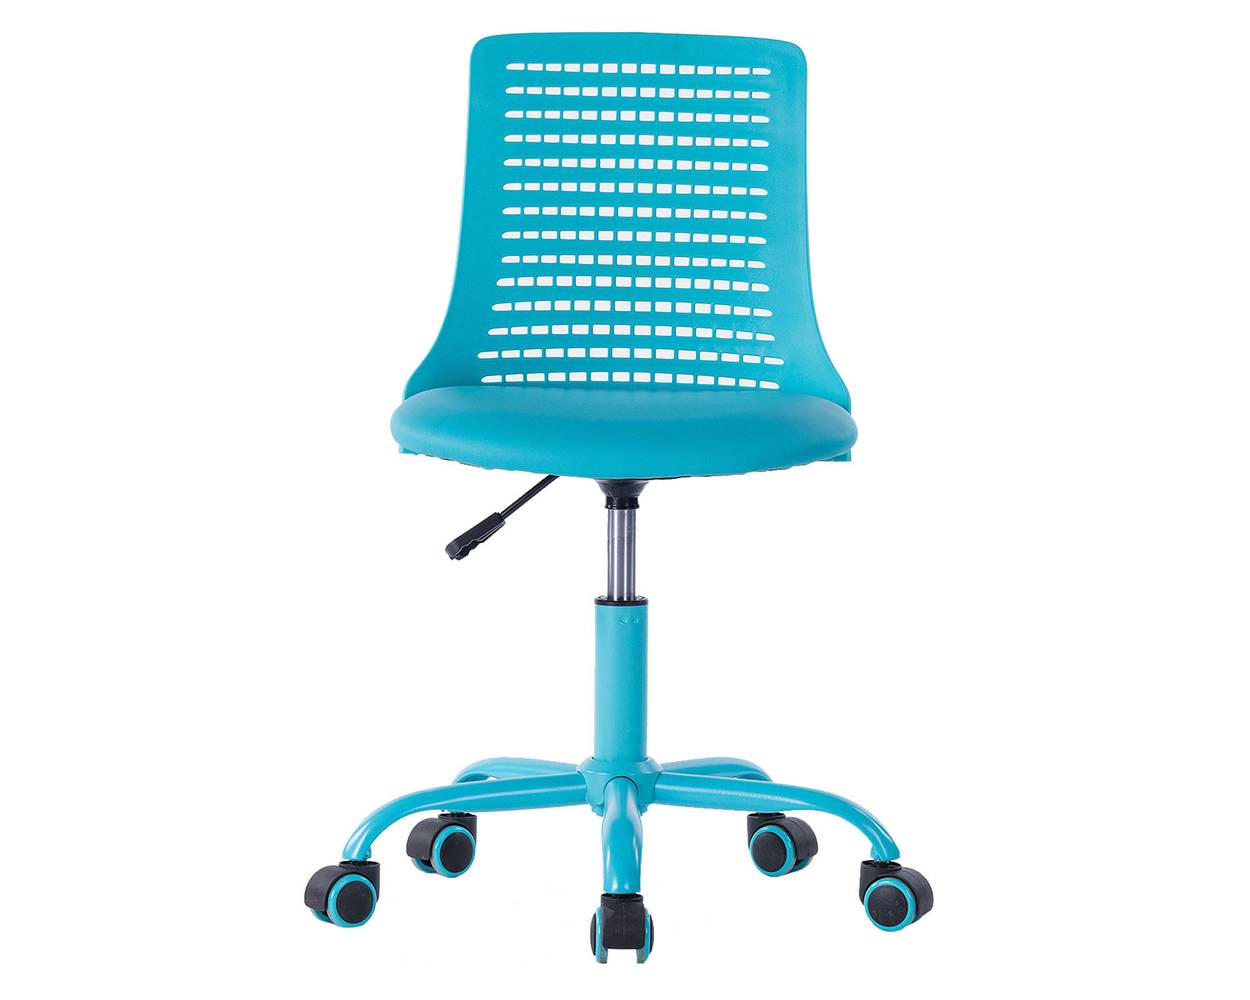 M+design silla pc cool celeste (30 x 23.5 x 106 cm)